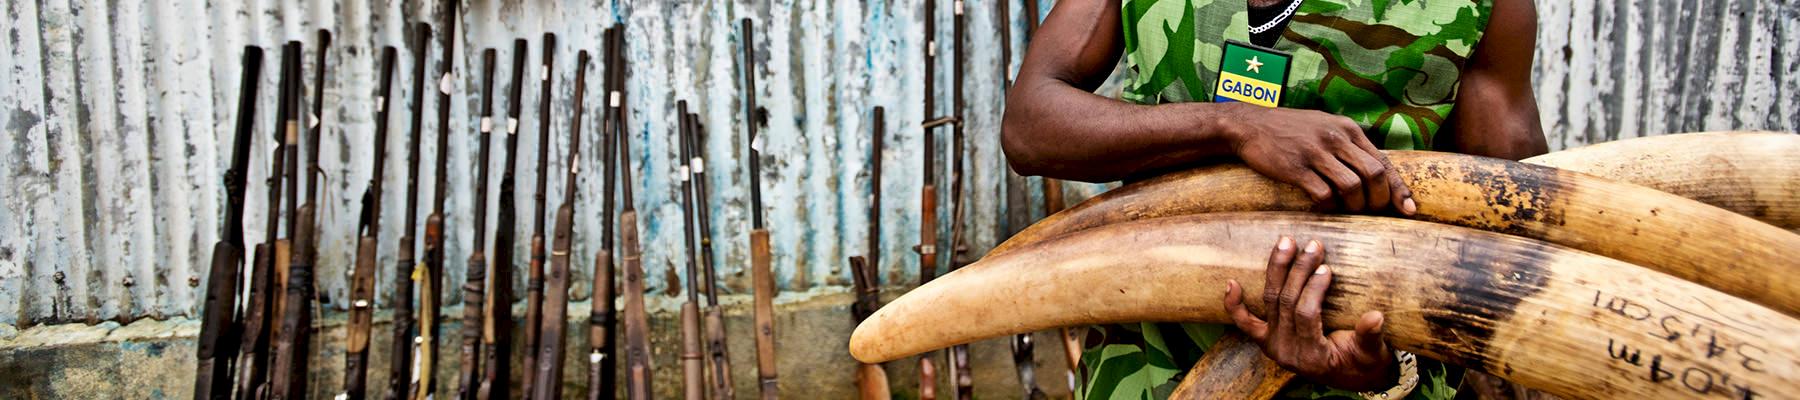 Seized poached elephant tusks and poacher's weapons, Oyem, Gabon © WWF / James Morgan